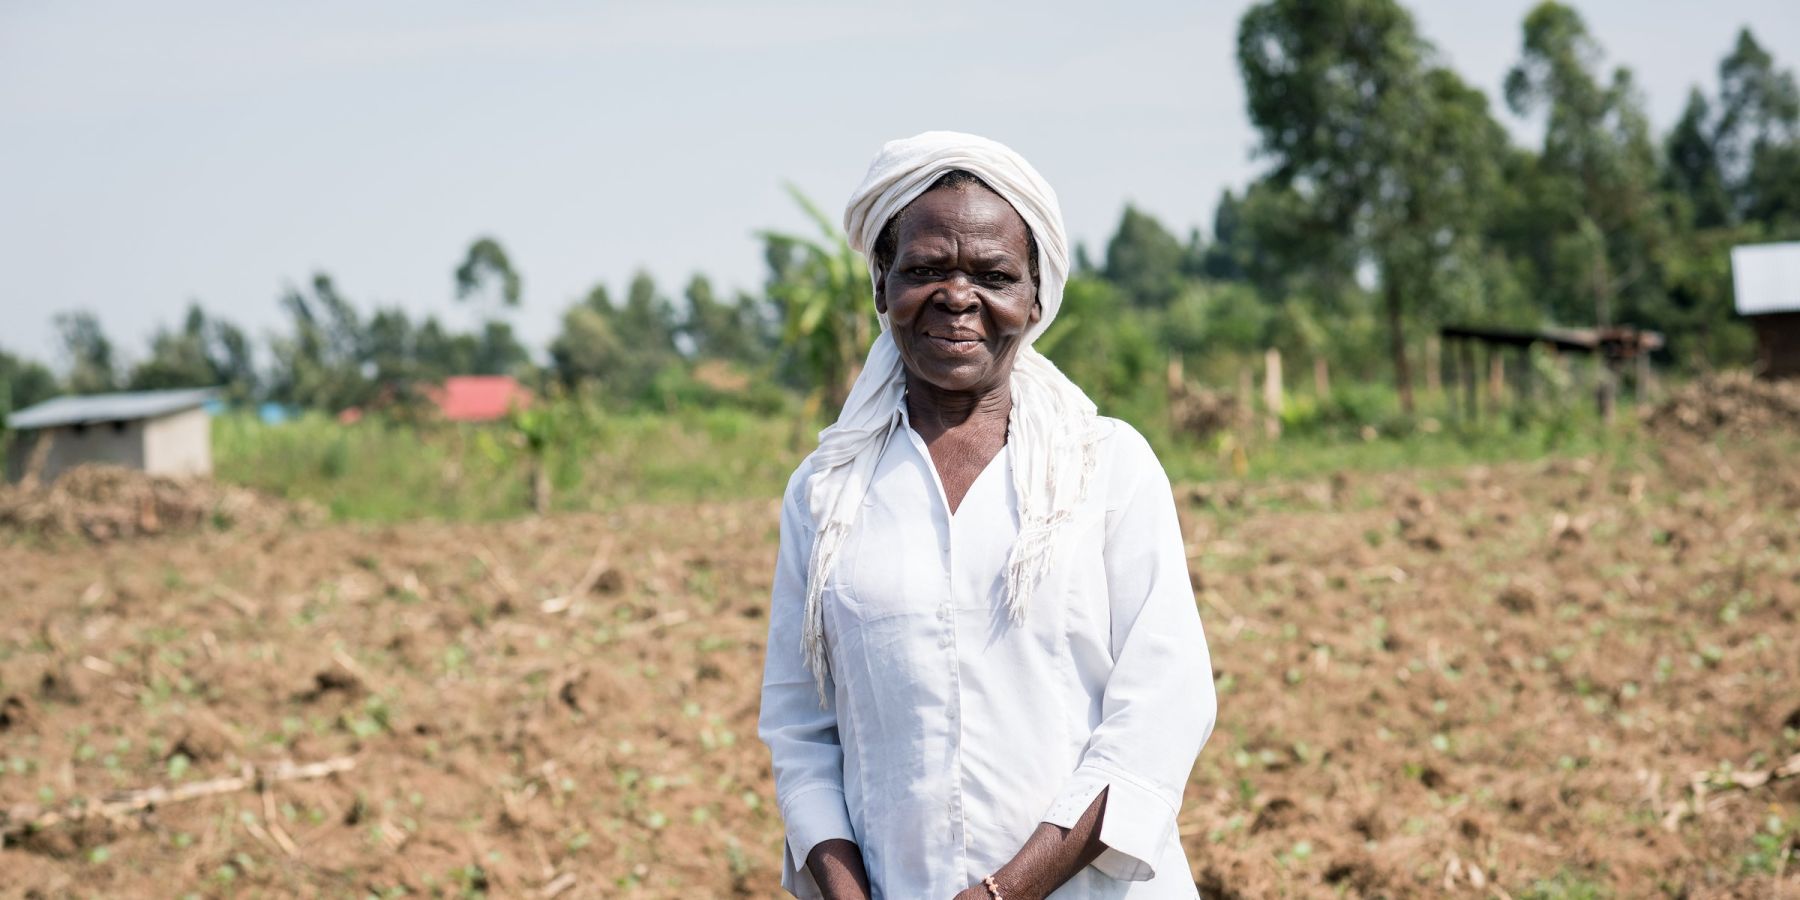 Theresa Wanyama stands in her field in Kenya